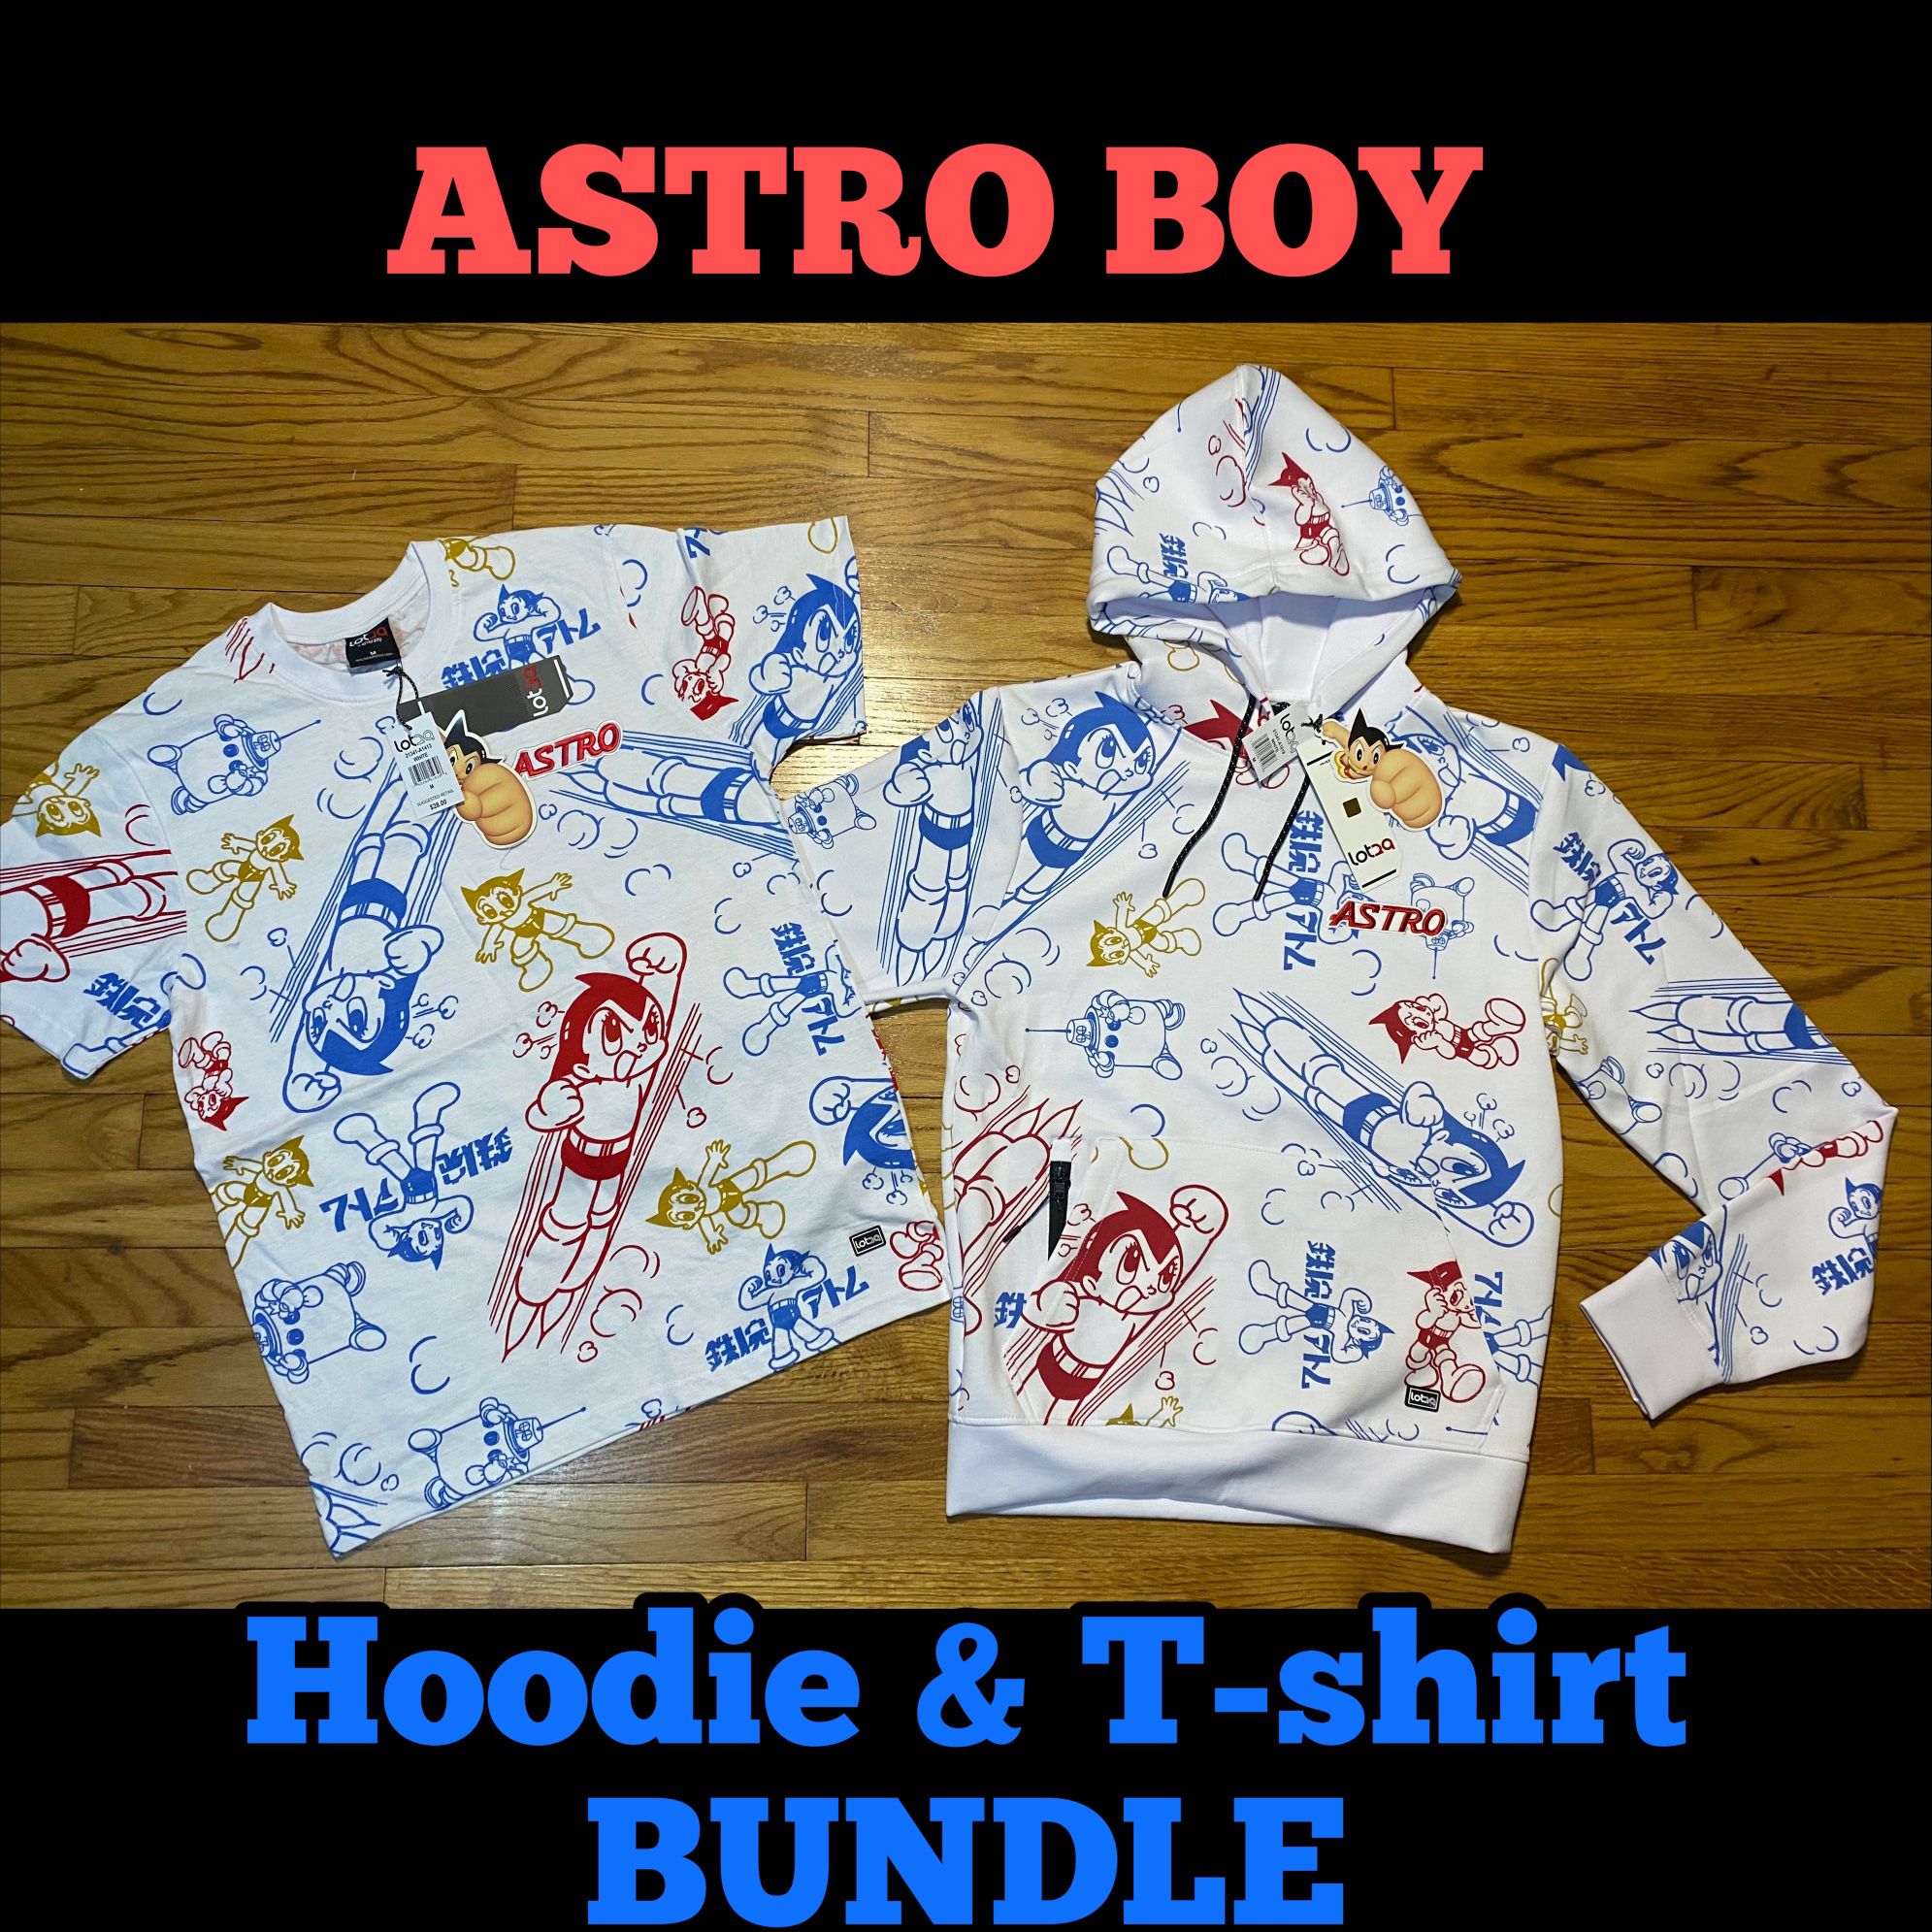 Astro Boy Licensed Cartoon Merchandise BUNDLE!Hoodie & T-shirt Sz M New  @924 for Sale in Bridgeport, CT - OfferUp